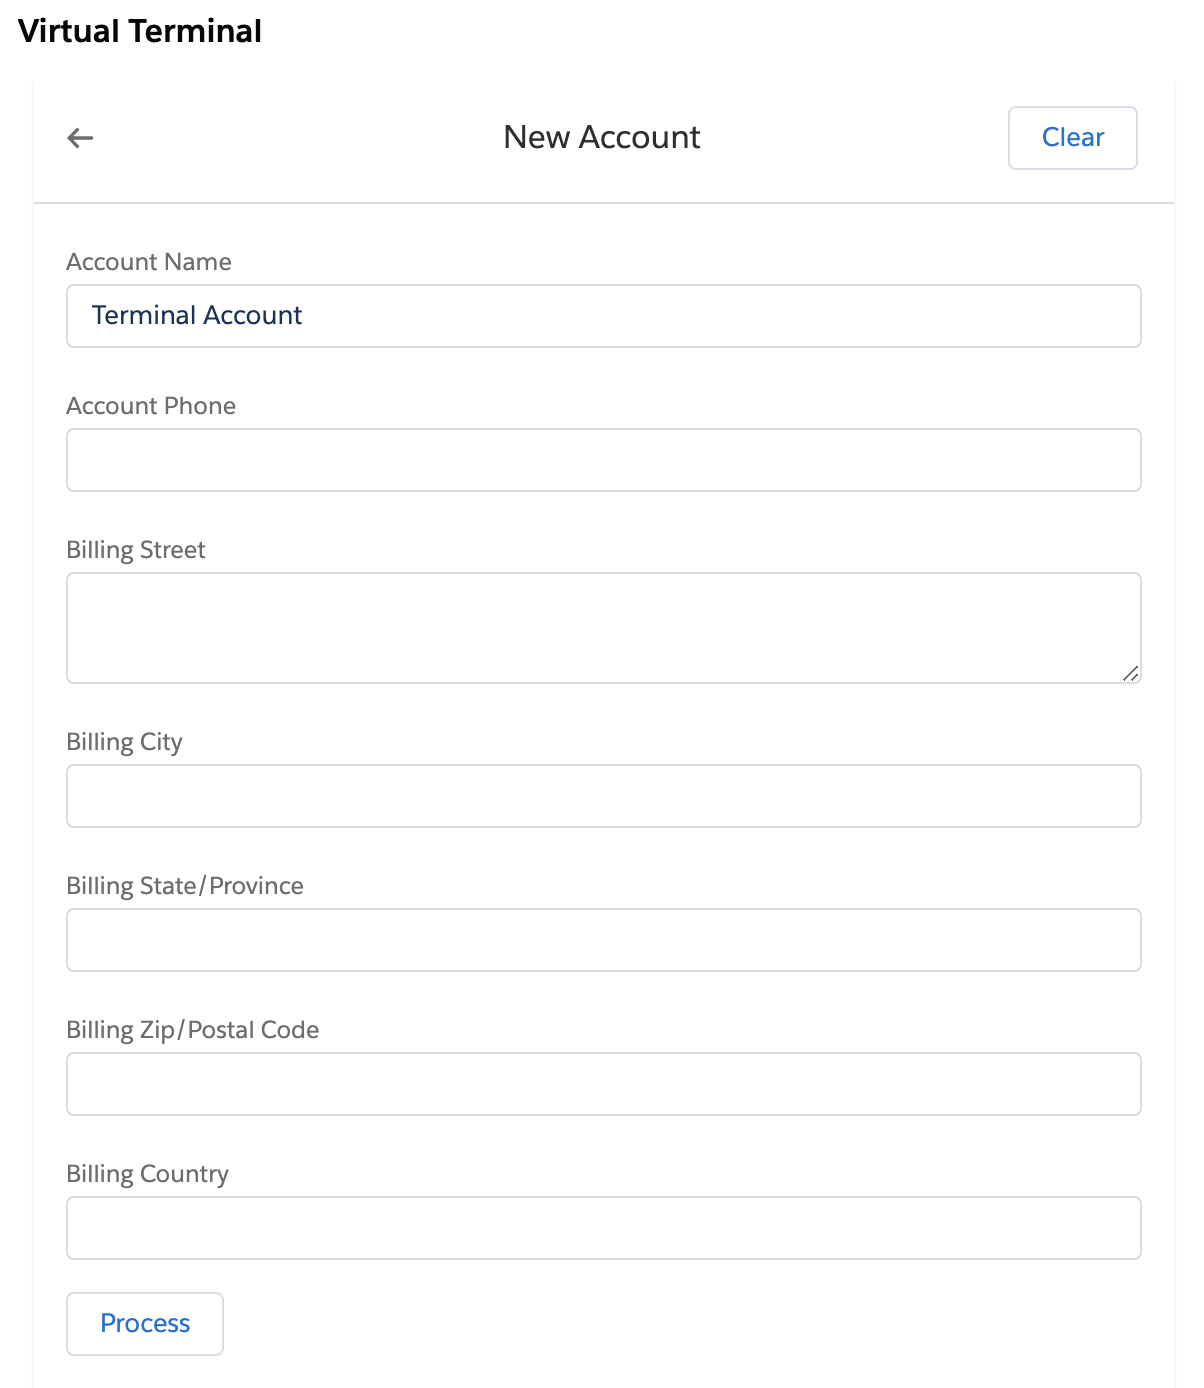 New account record screen - Virtual terminal